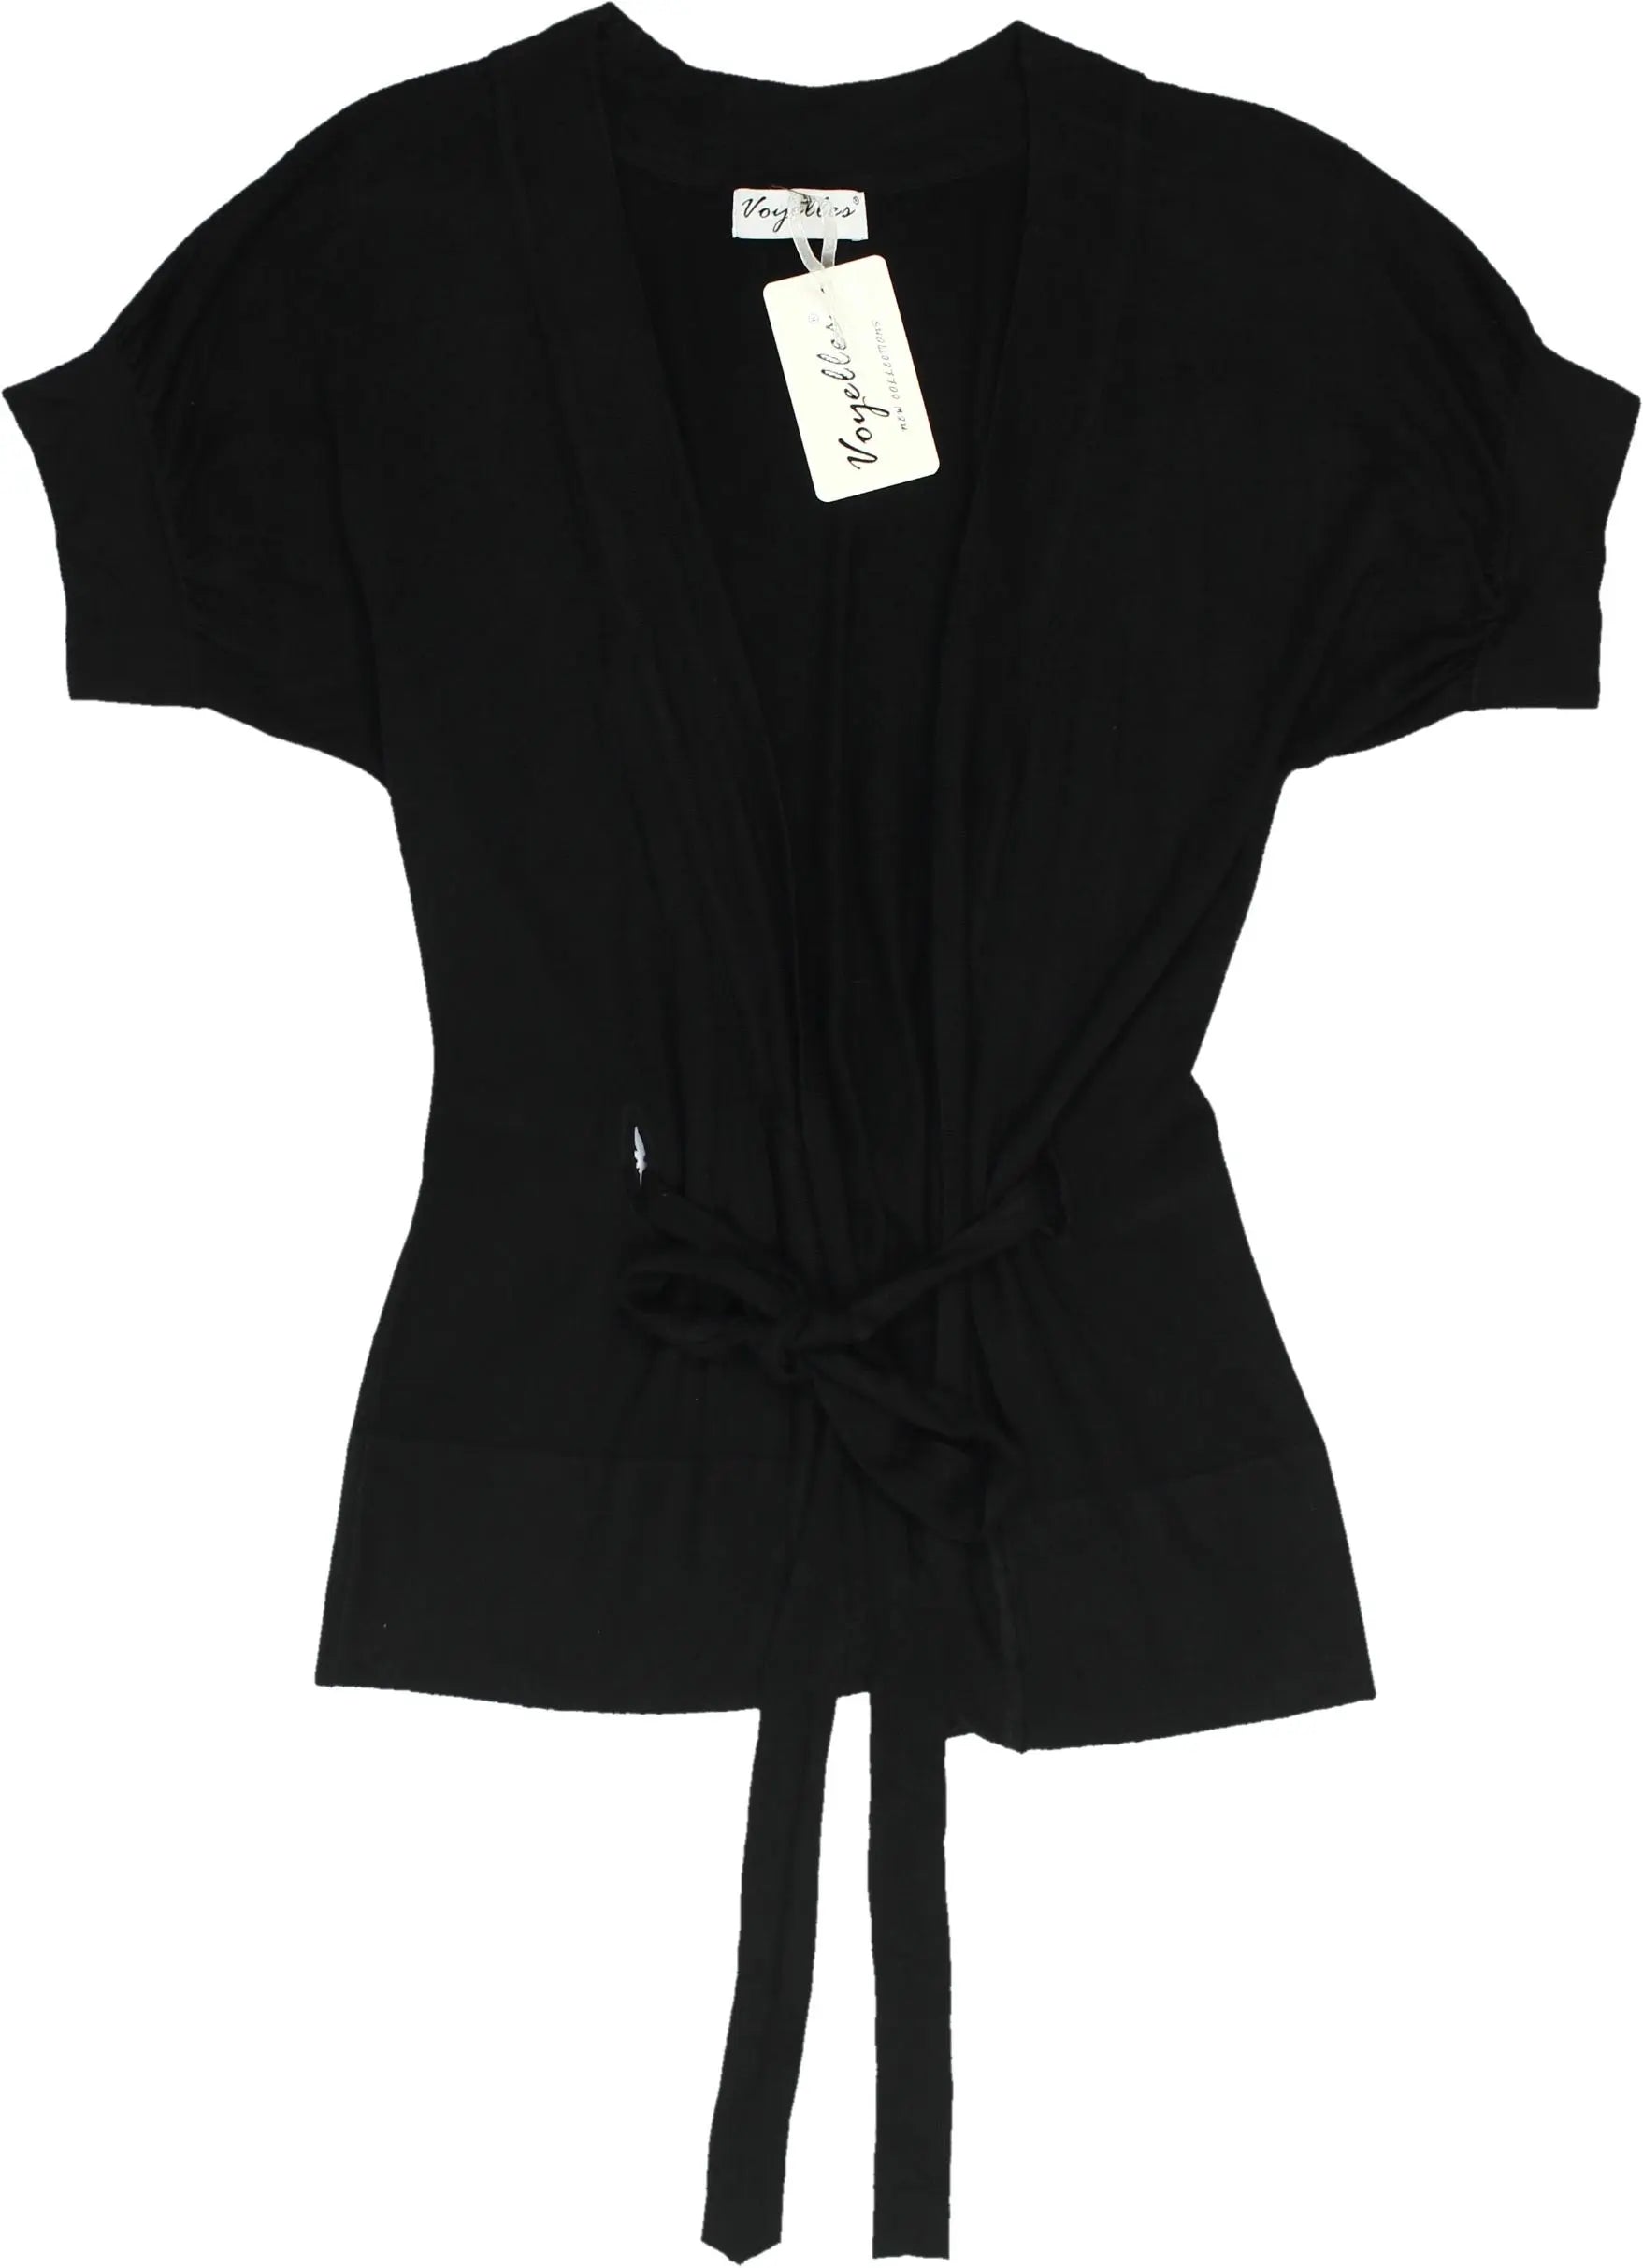 Voyelles - Black Belted Short Sleeve Cardigan- ThriftTale.com - Vintage and second handclothing